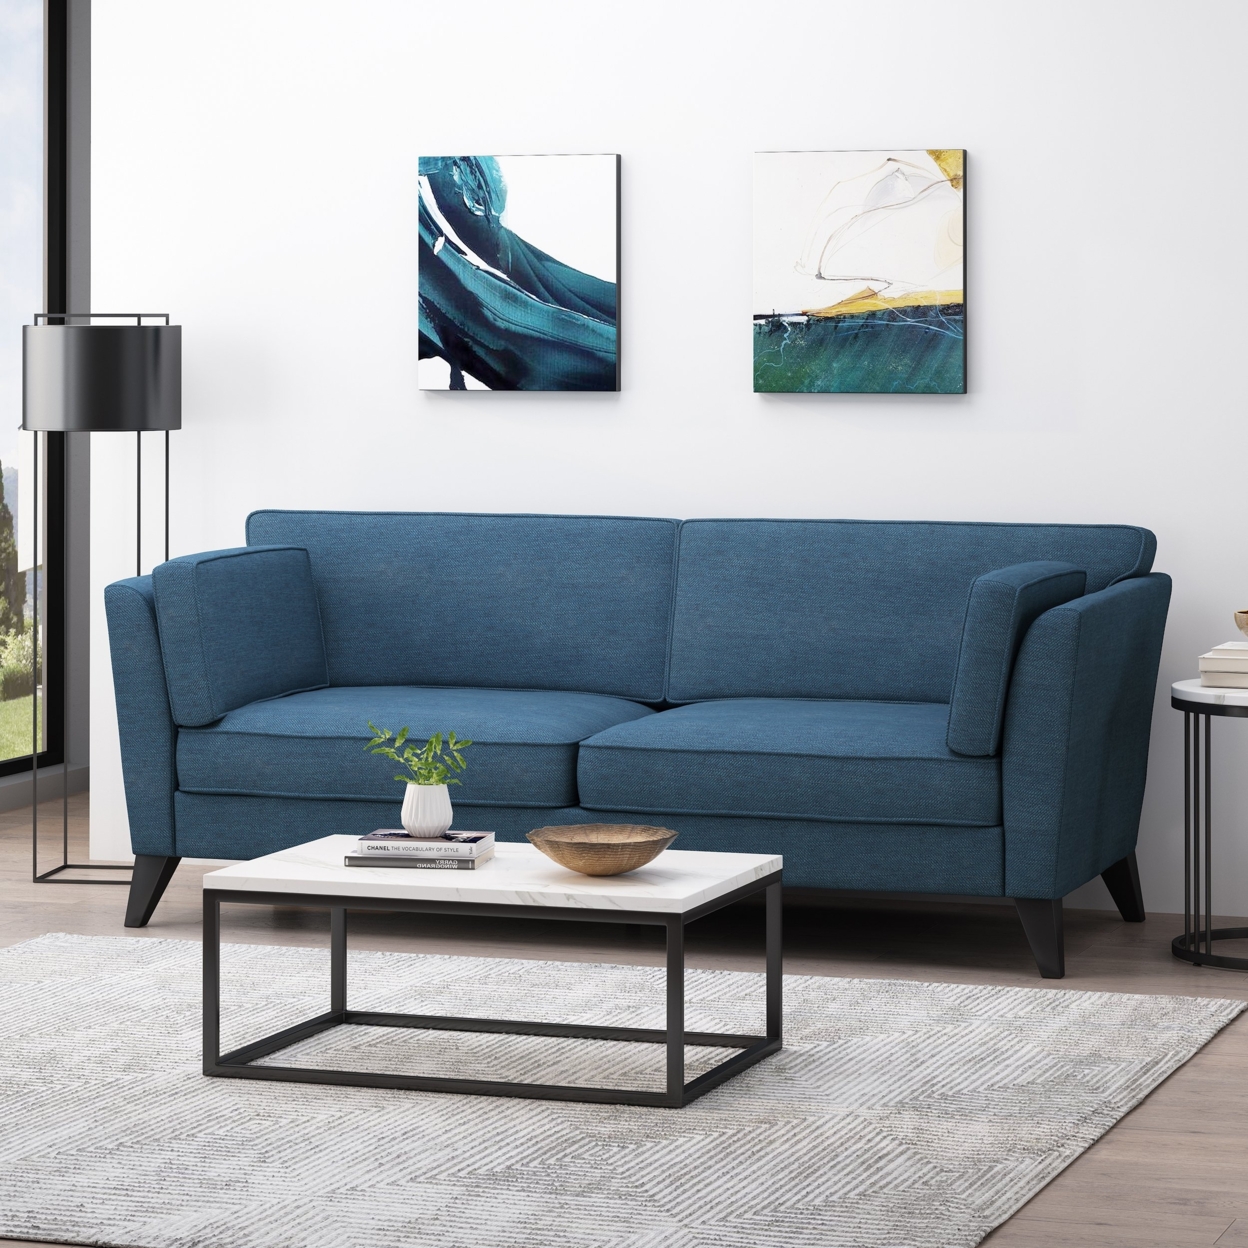 Sabirin Contemporary 3 Seater Fabric Sofa - Navy Blue